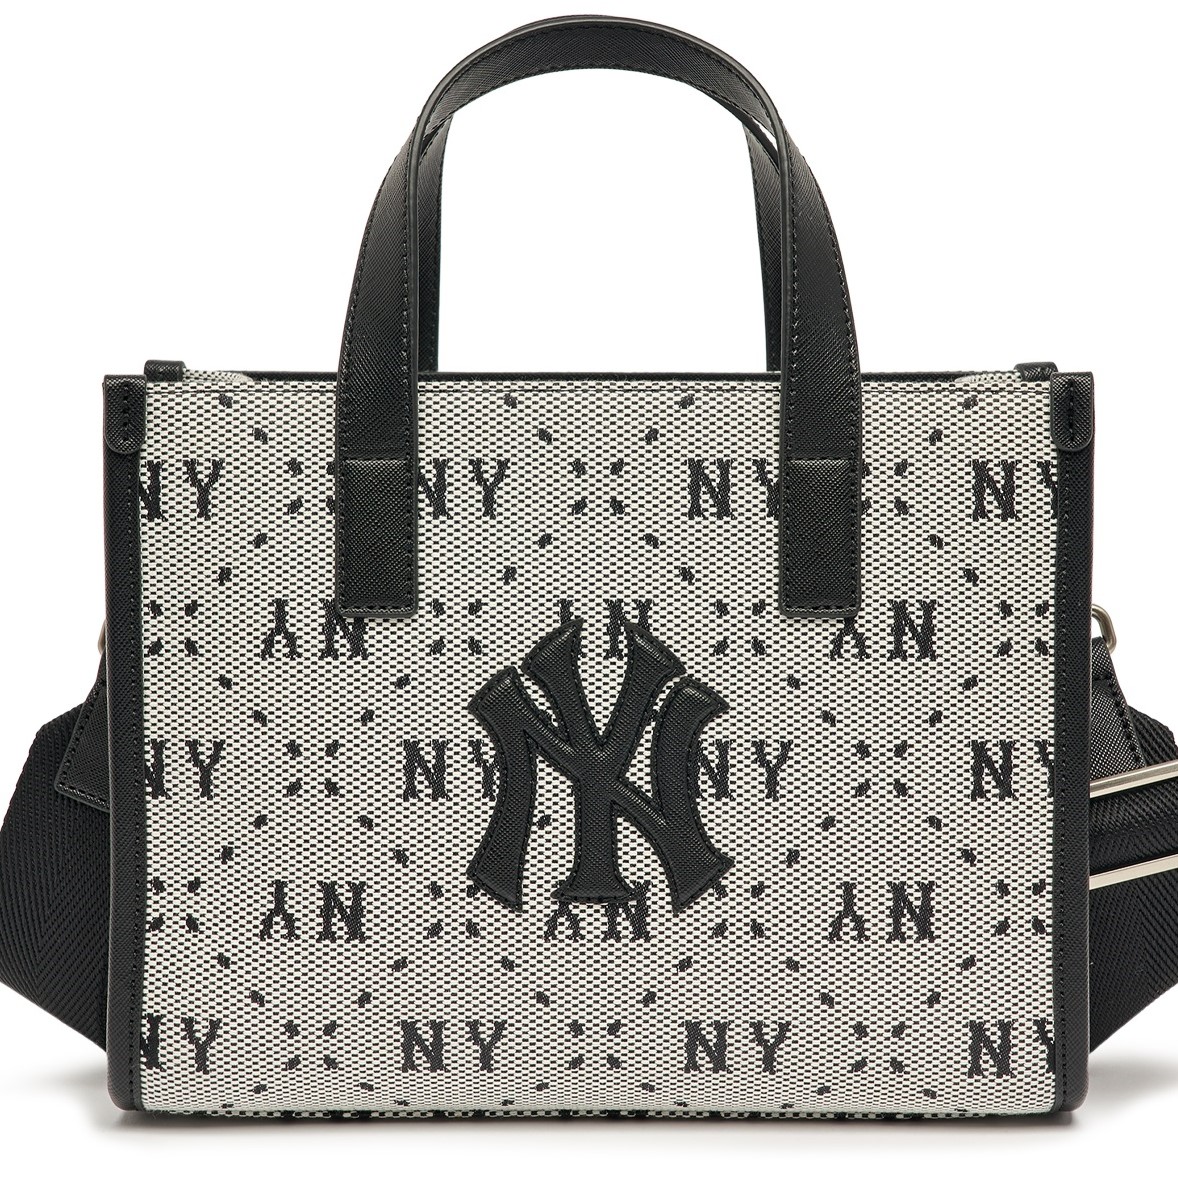 MLB KOREA Diamond Monogram Jacquard Tote Bag New York Yankees